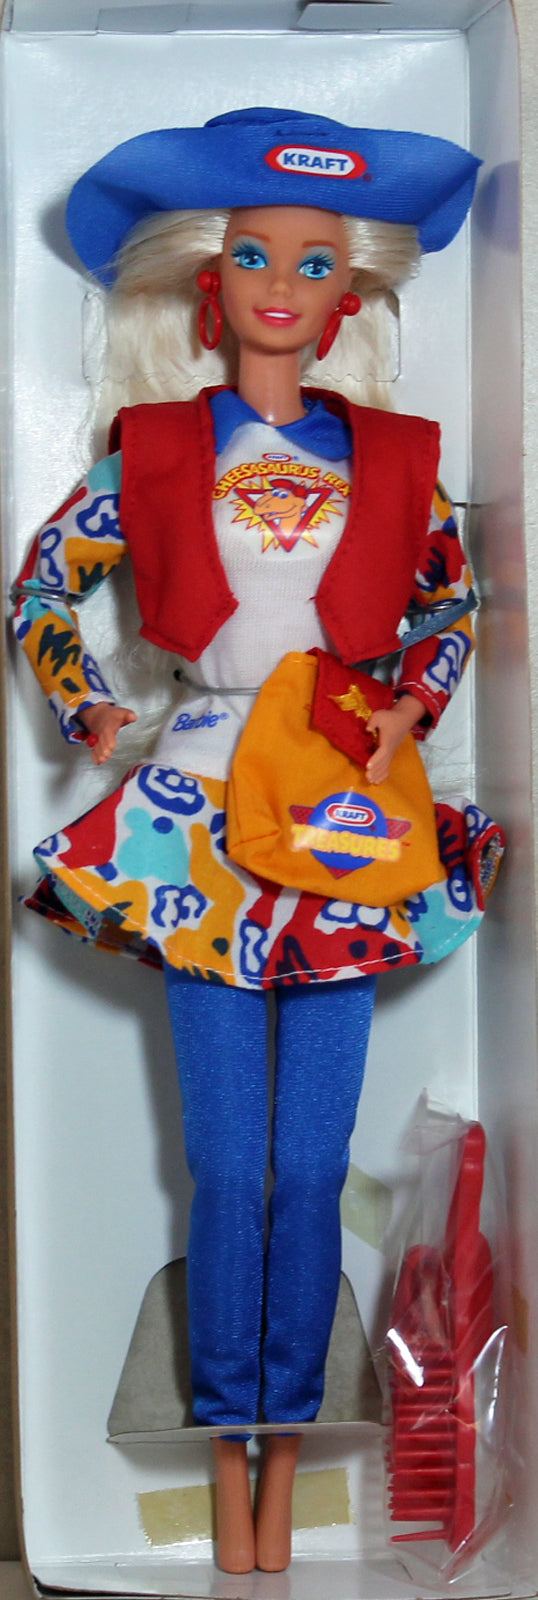 Kraft Treasures Barbie